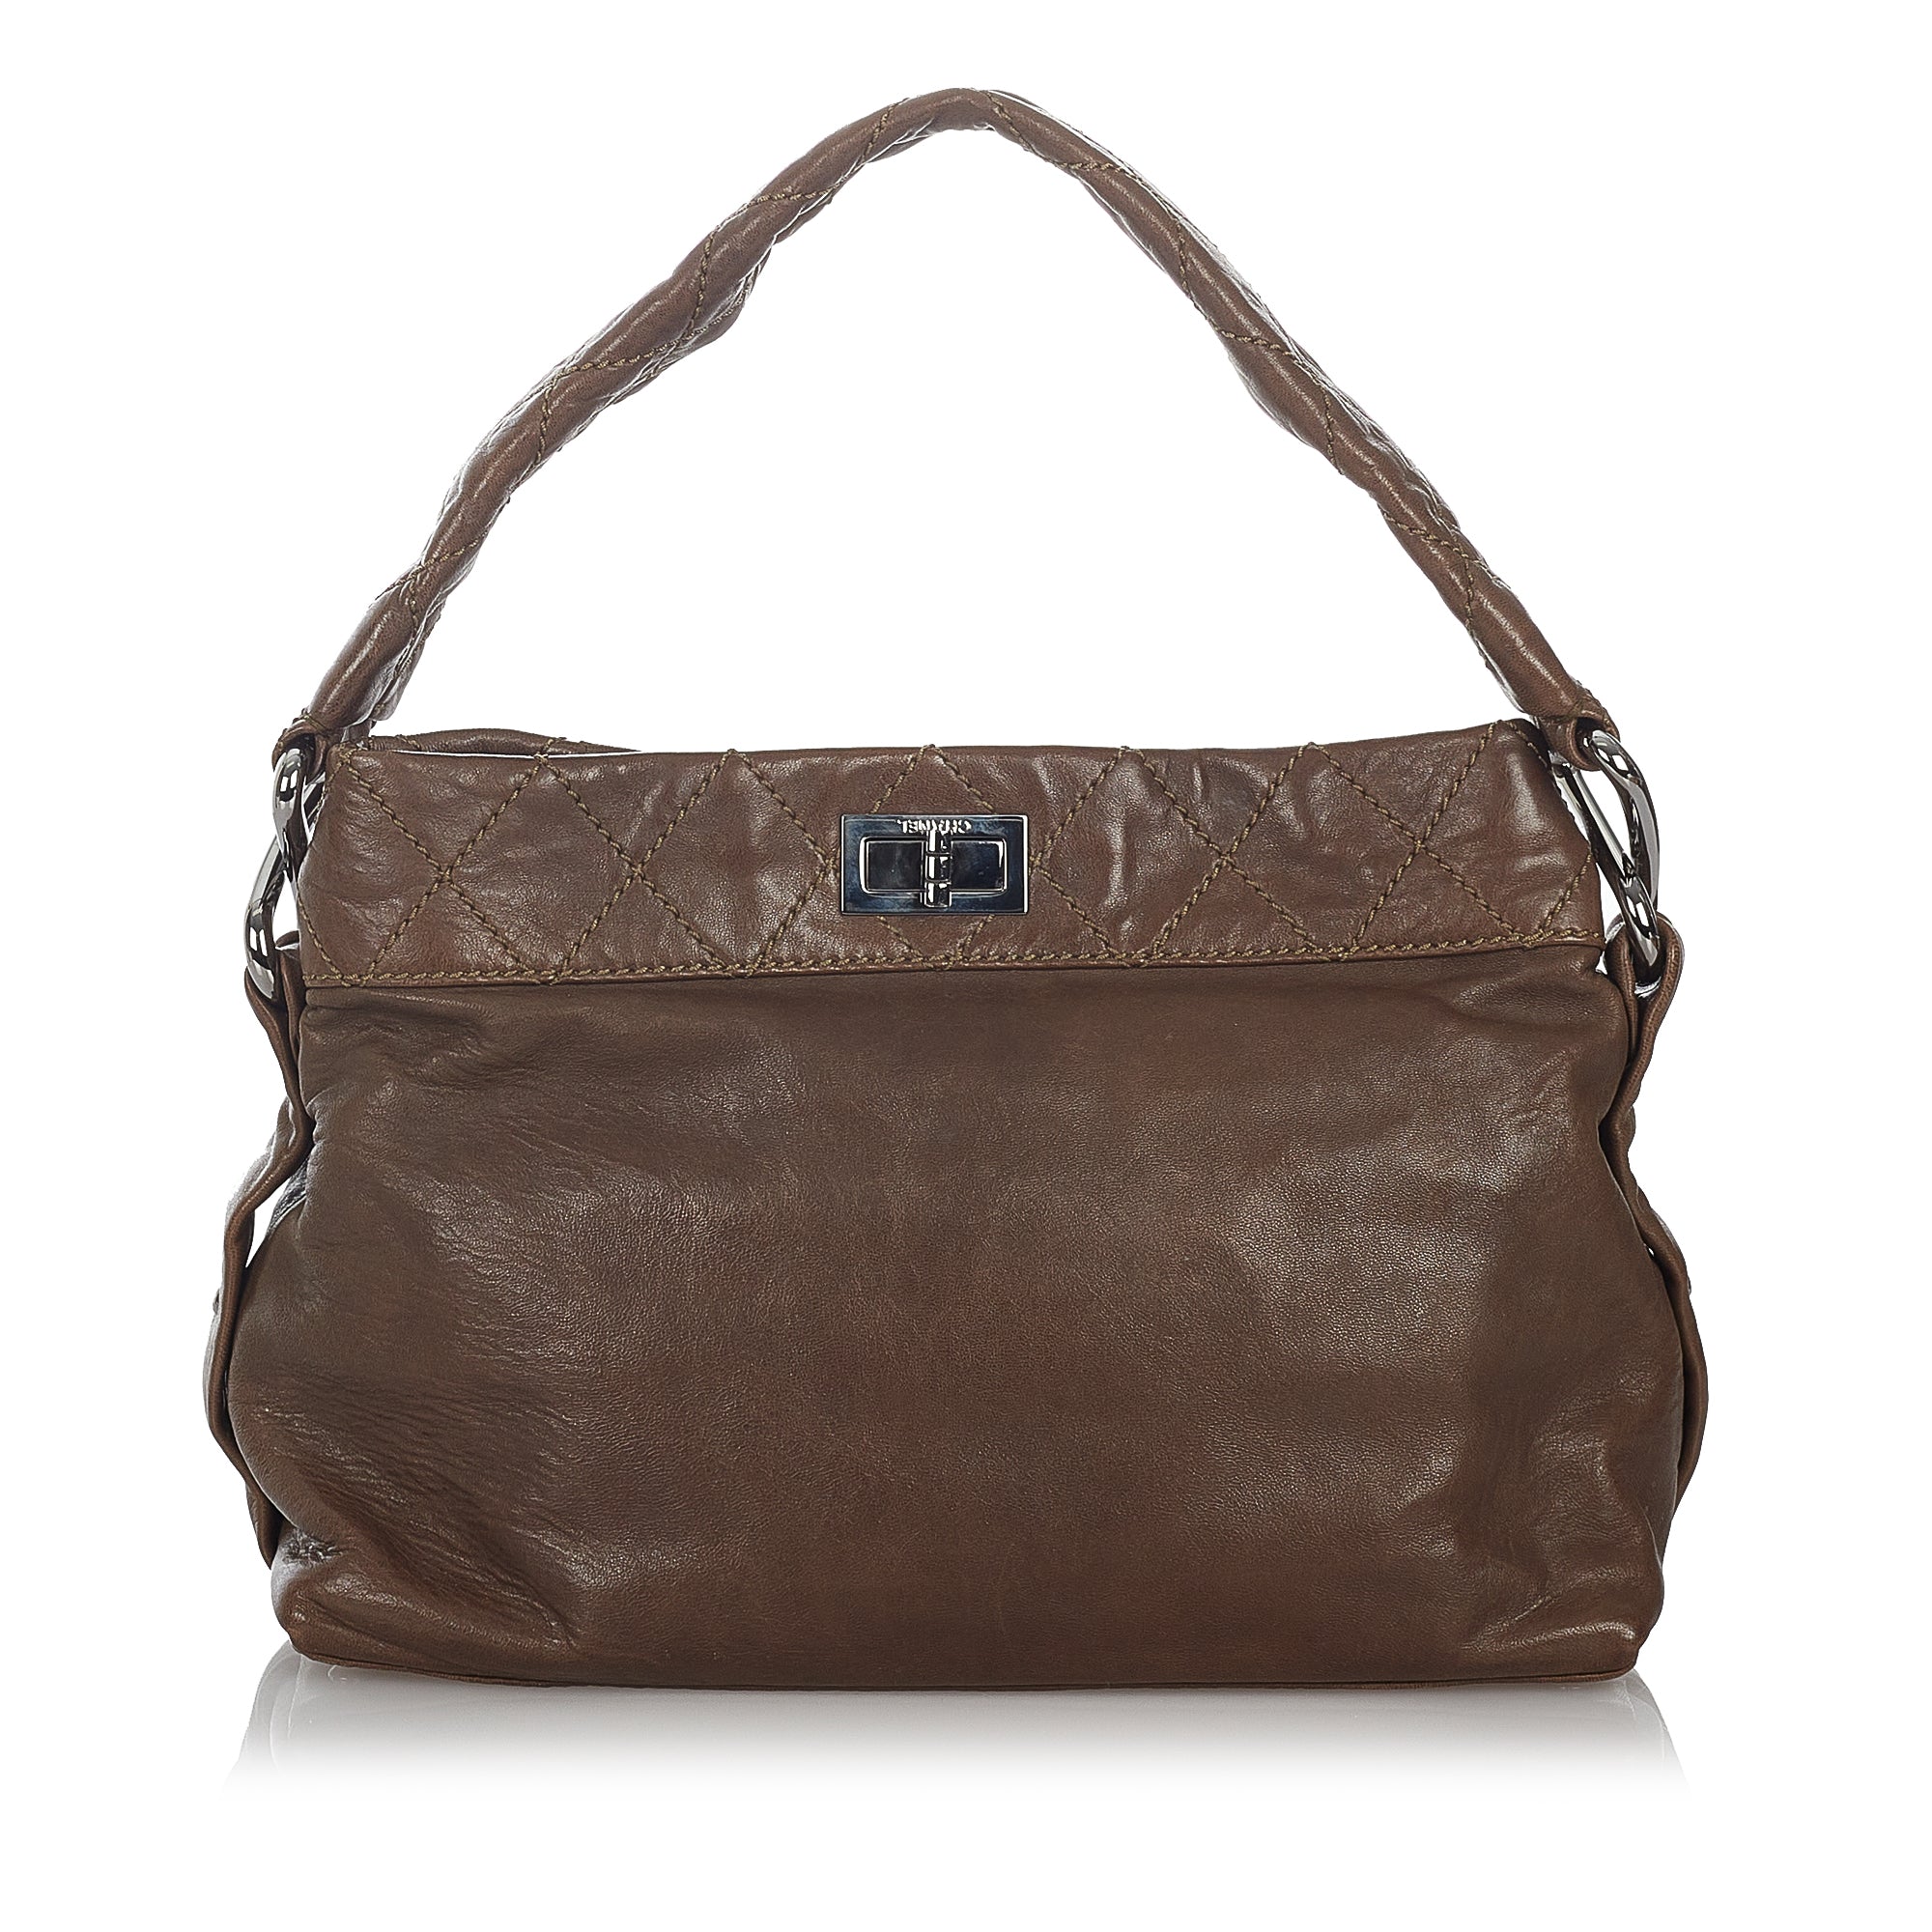 Dissona large capacity bag genuine leather bag one shoulder